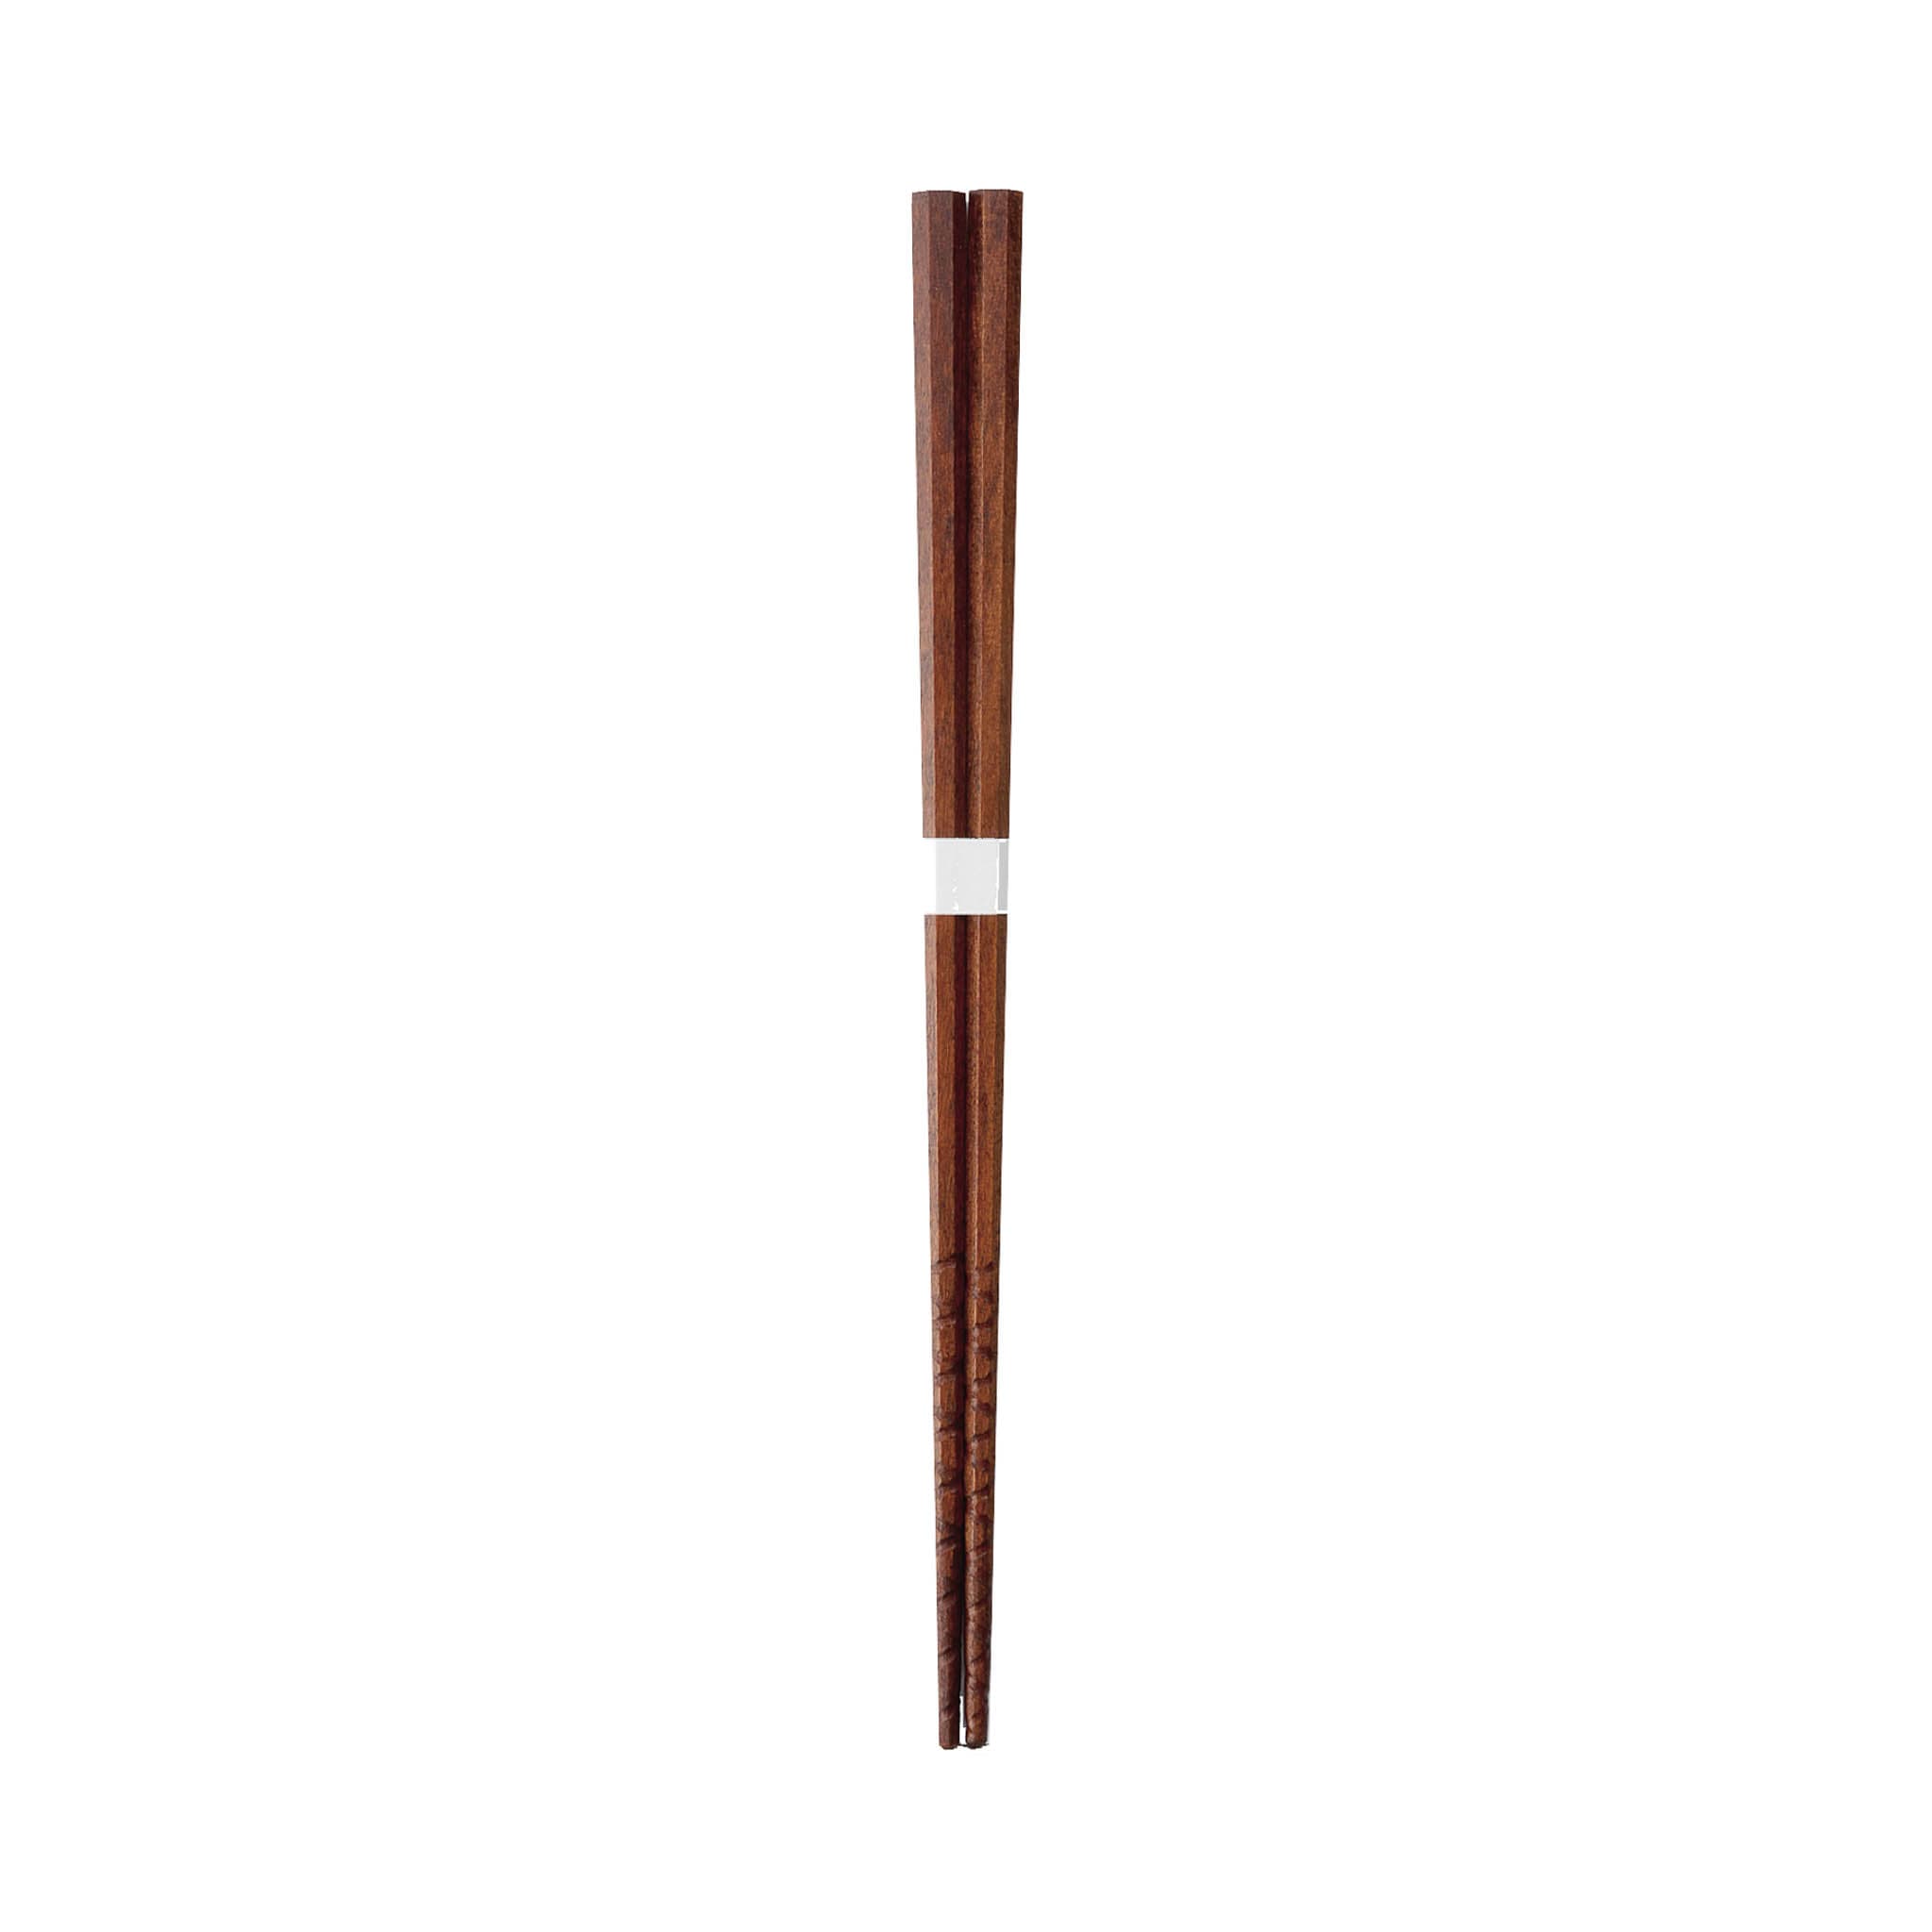 Japanese Lancewood Chopsticks for Ramen, 23cm